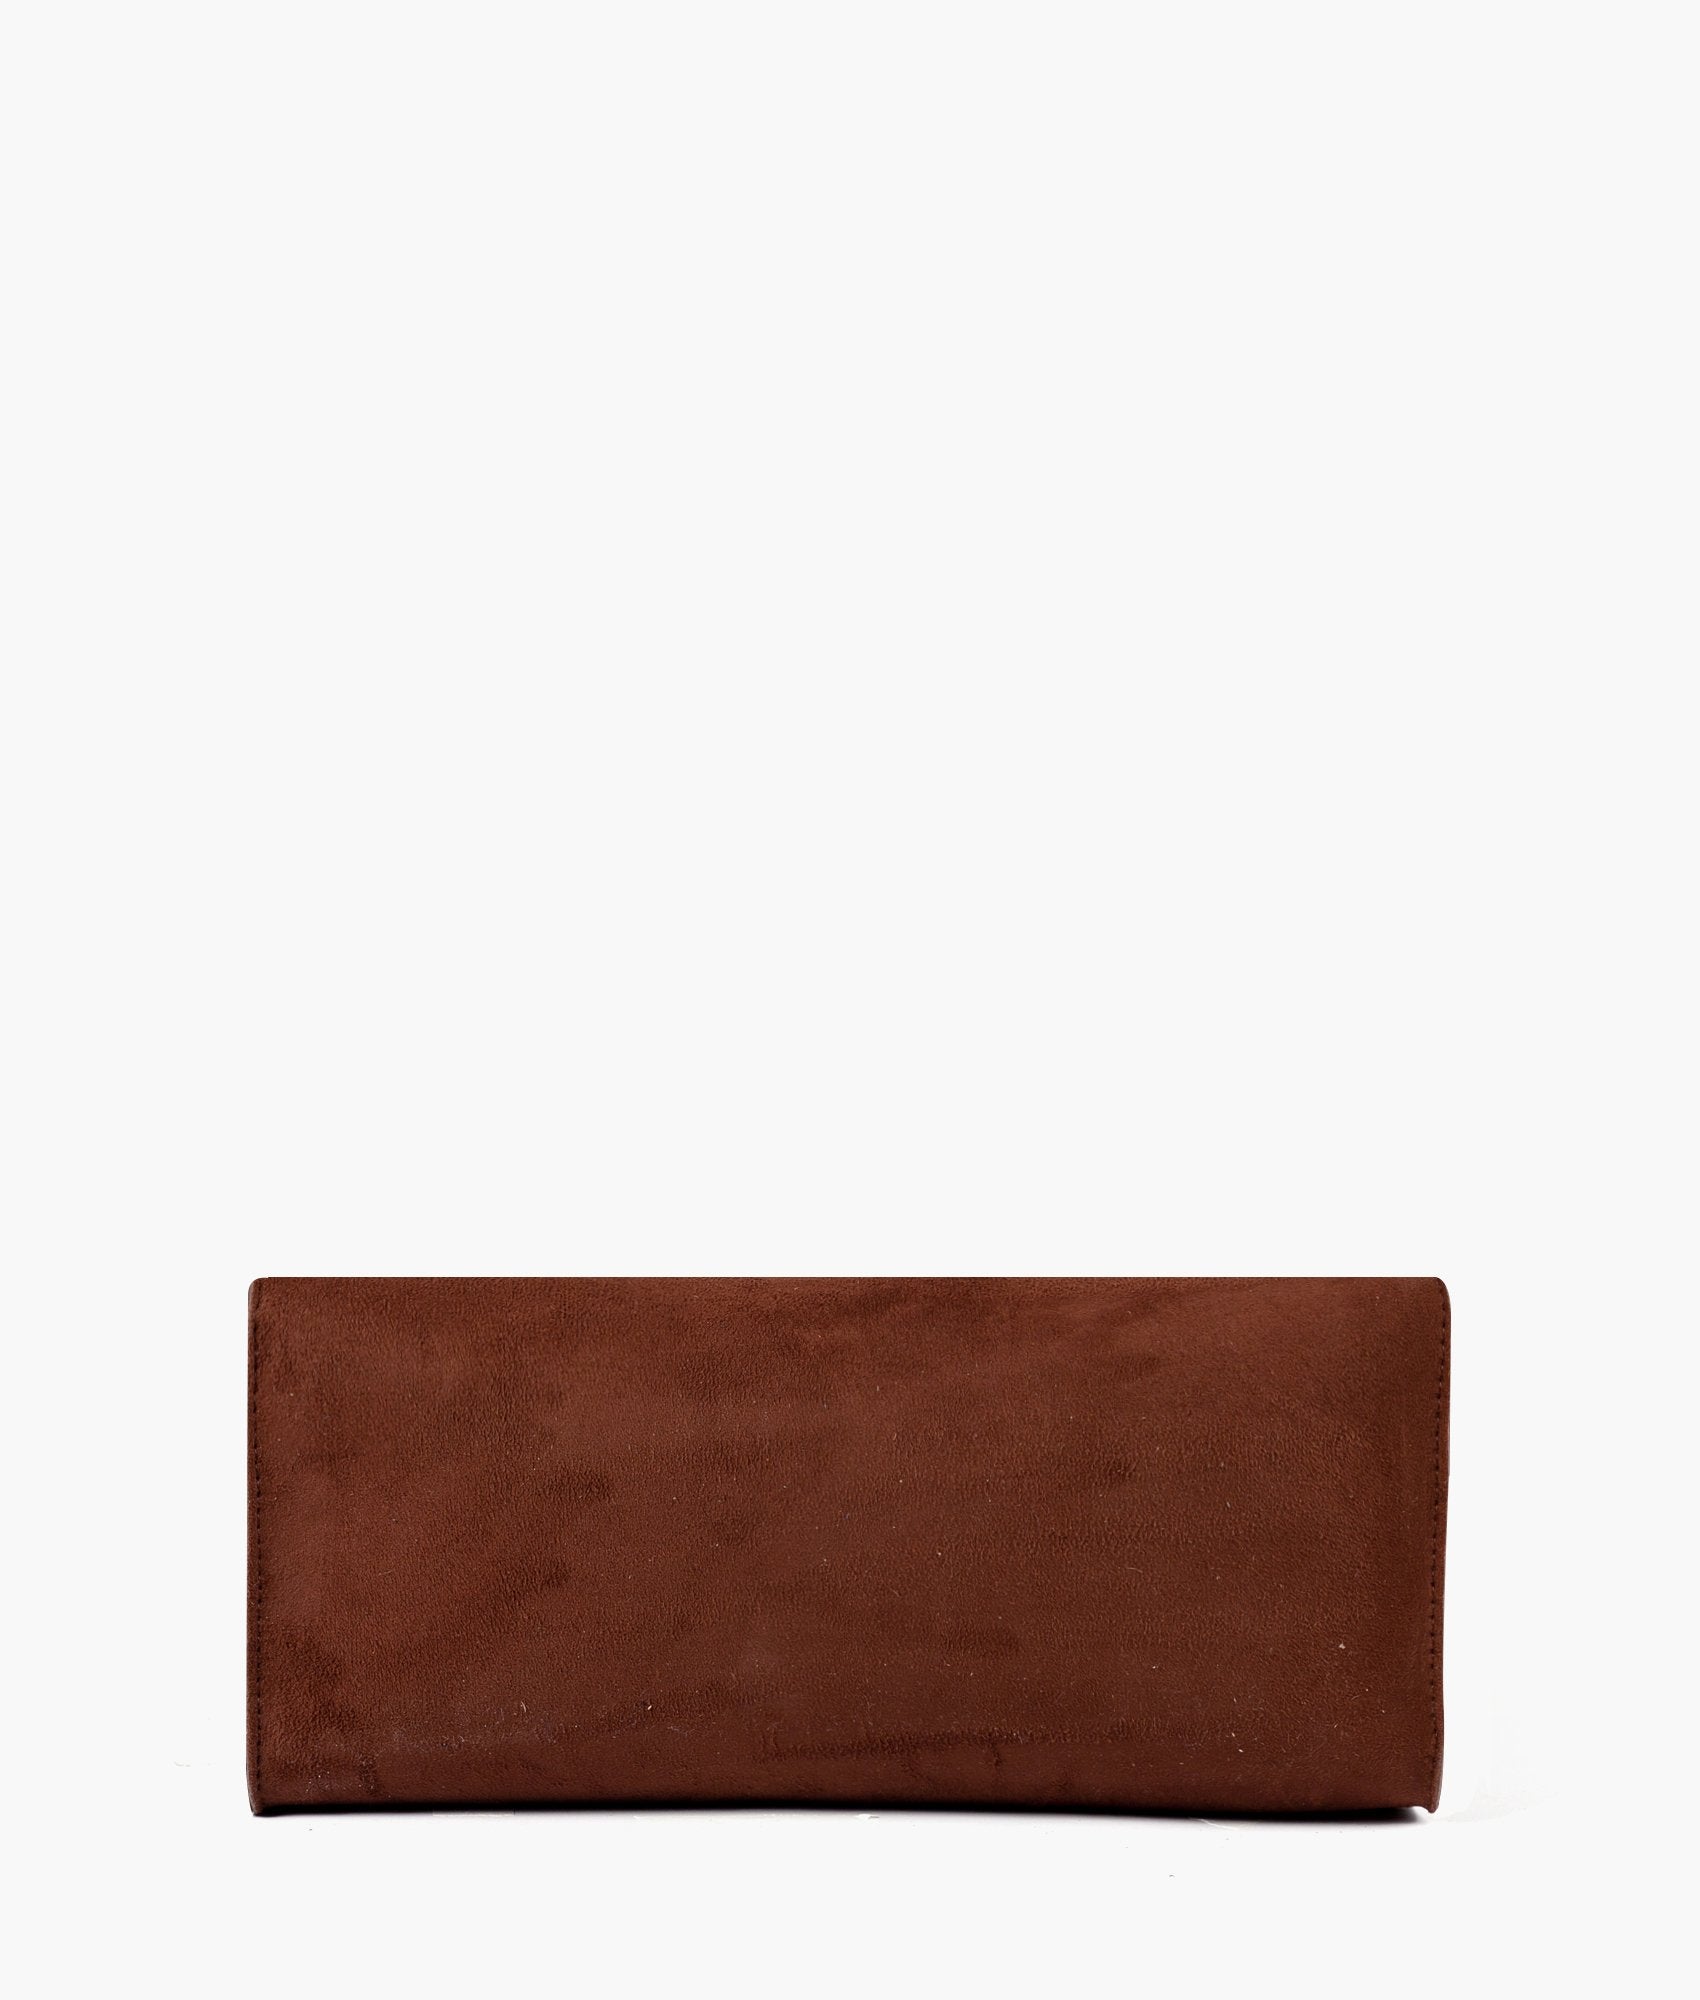 Dark brown suede multi compartment satchel bag